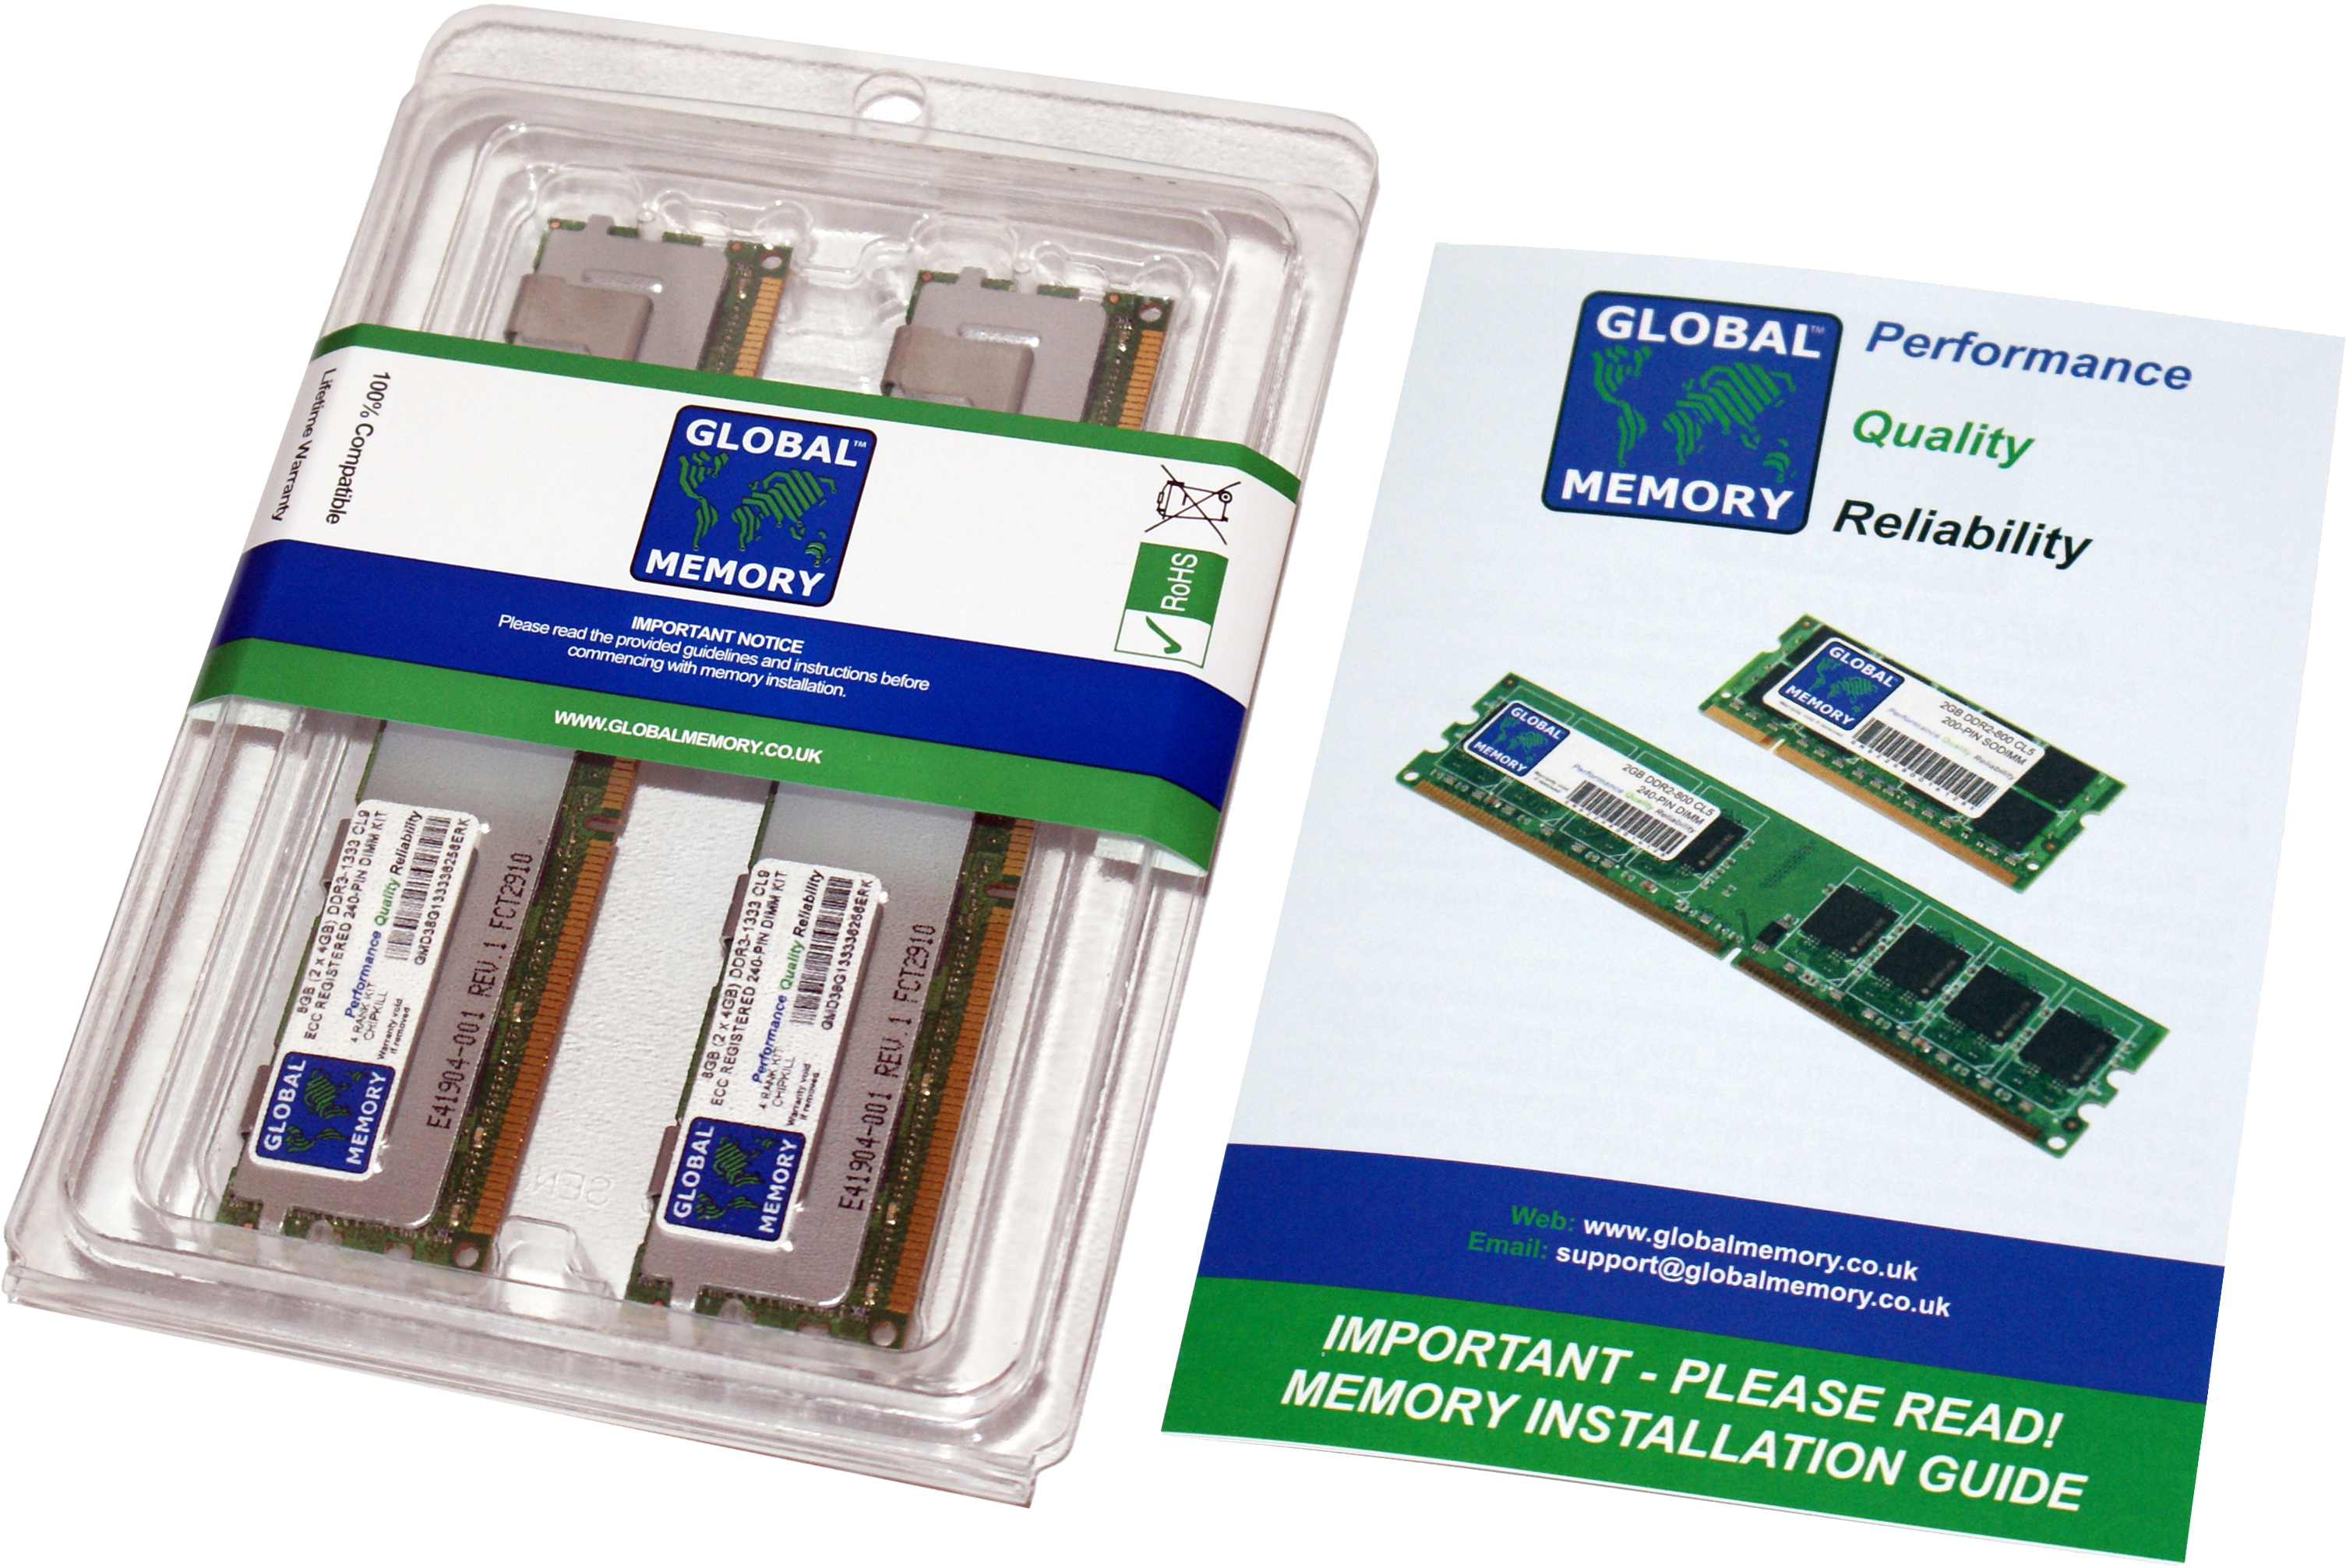 32GB (2 x 16GB) DDR3 1333MHz PC3-10600 240-PIN ECC REGISTERED DIMM (RDIMM) MEMORY RAM KIT FOR ACER SERVERS/WORKSTATIONS (8 RANK KIT NON-CHIPKILL)